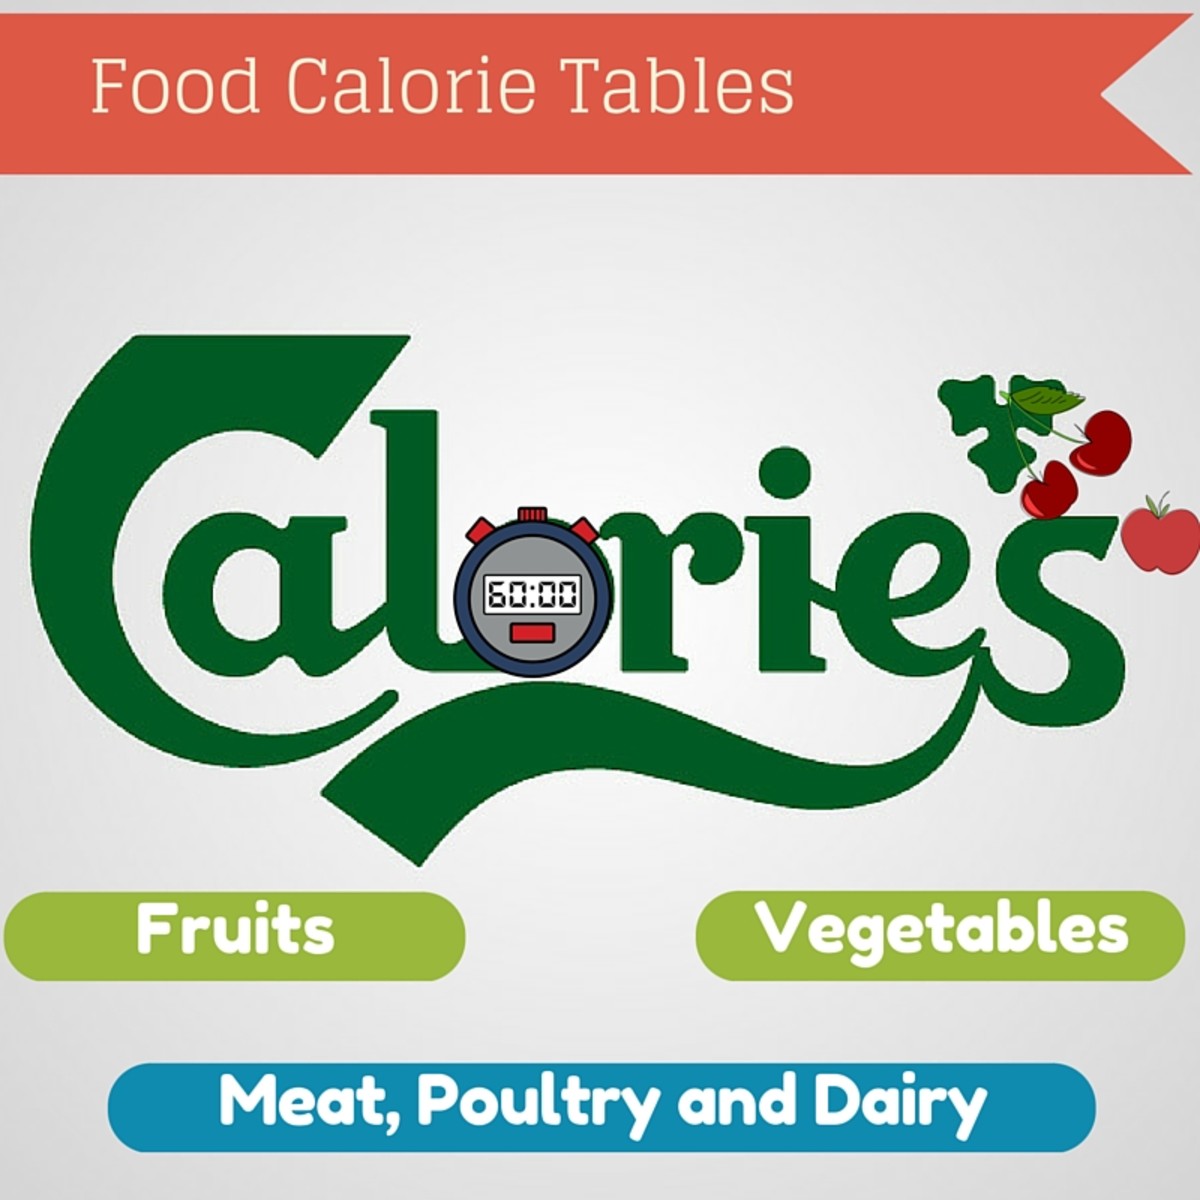 Fruit Calories Chart 100g